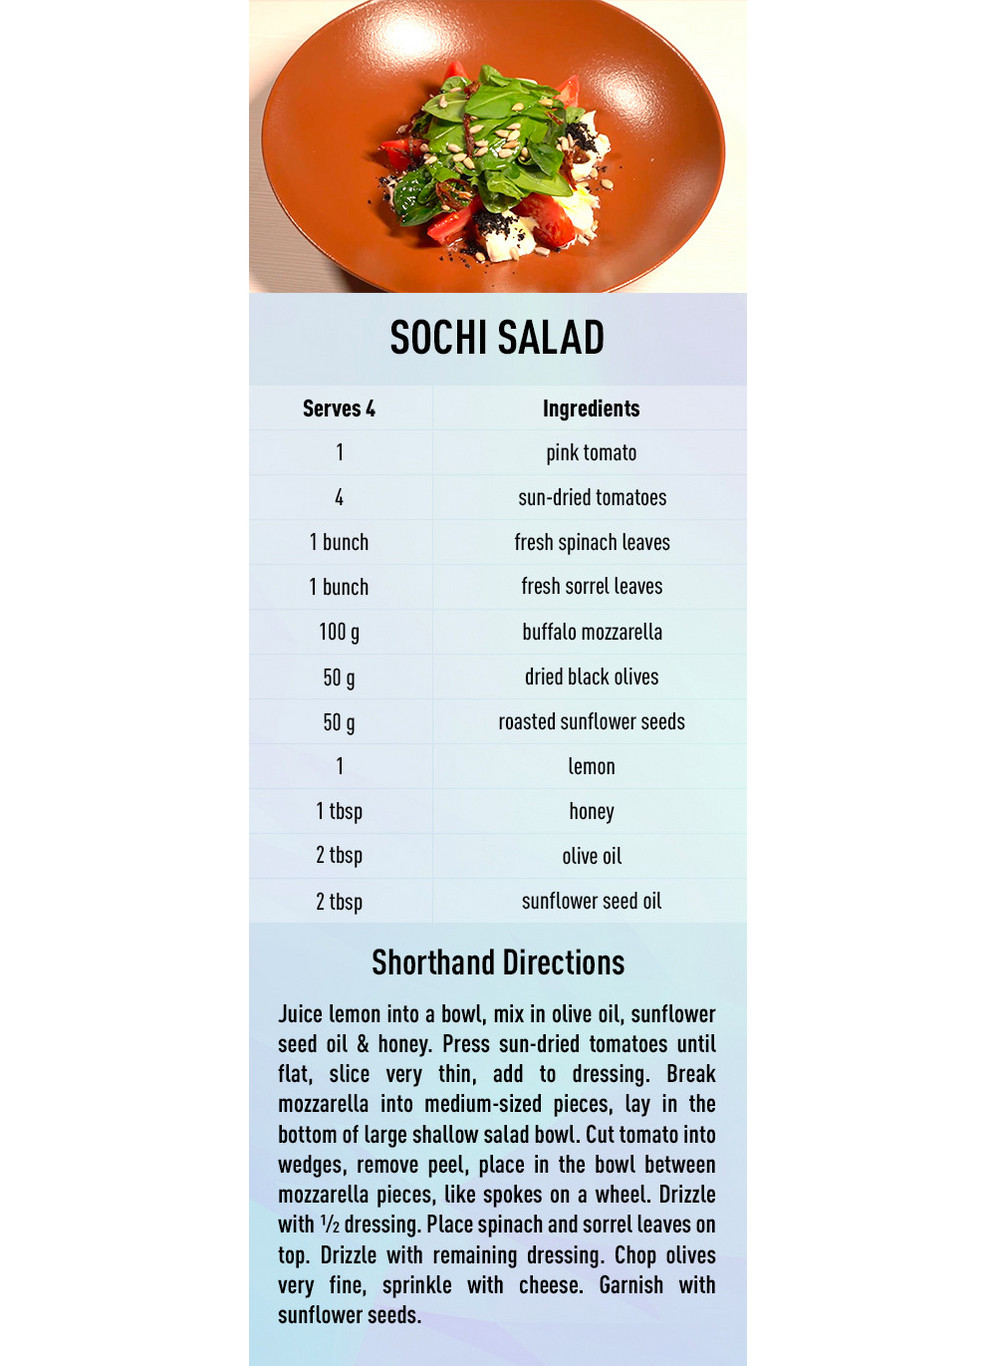 Sochi Salad recipe